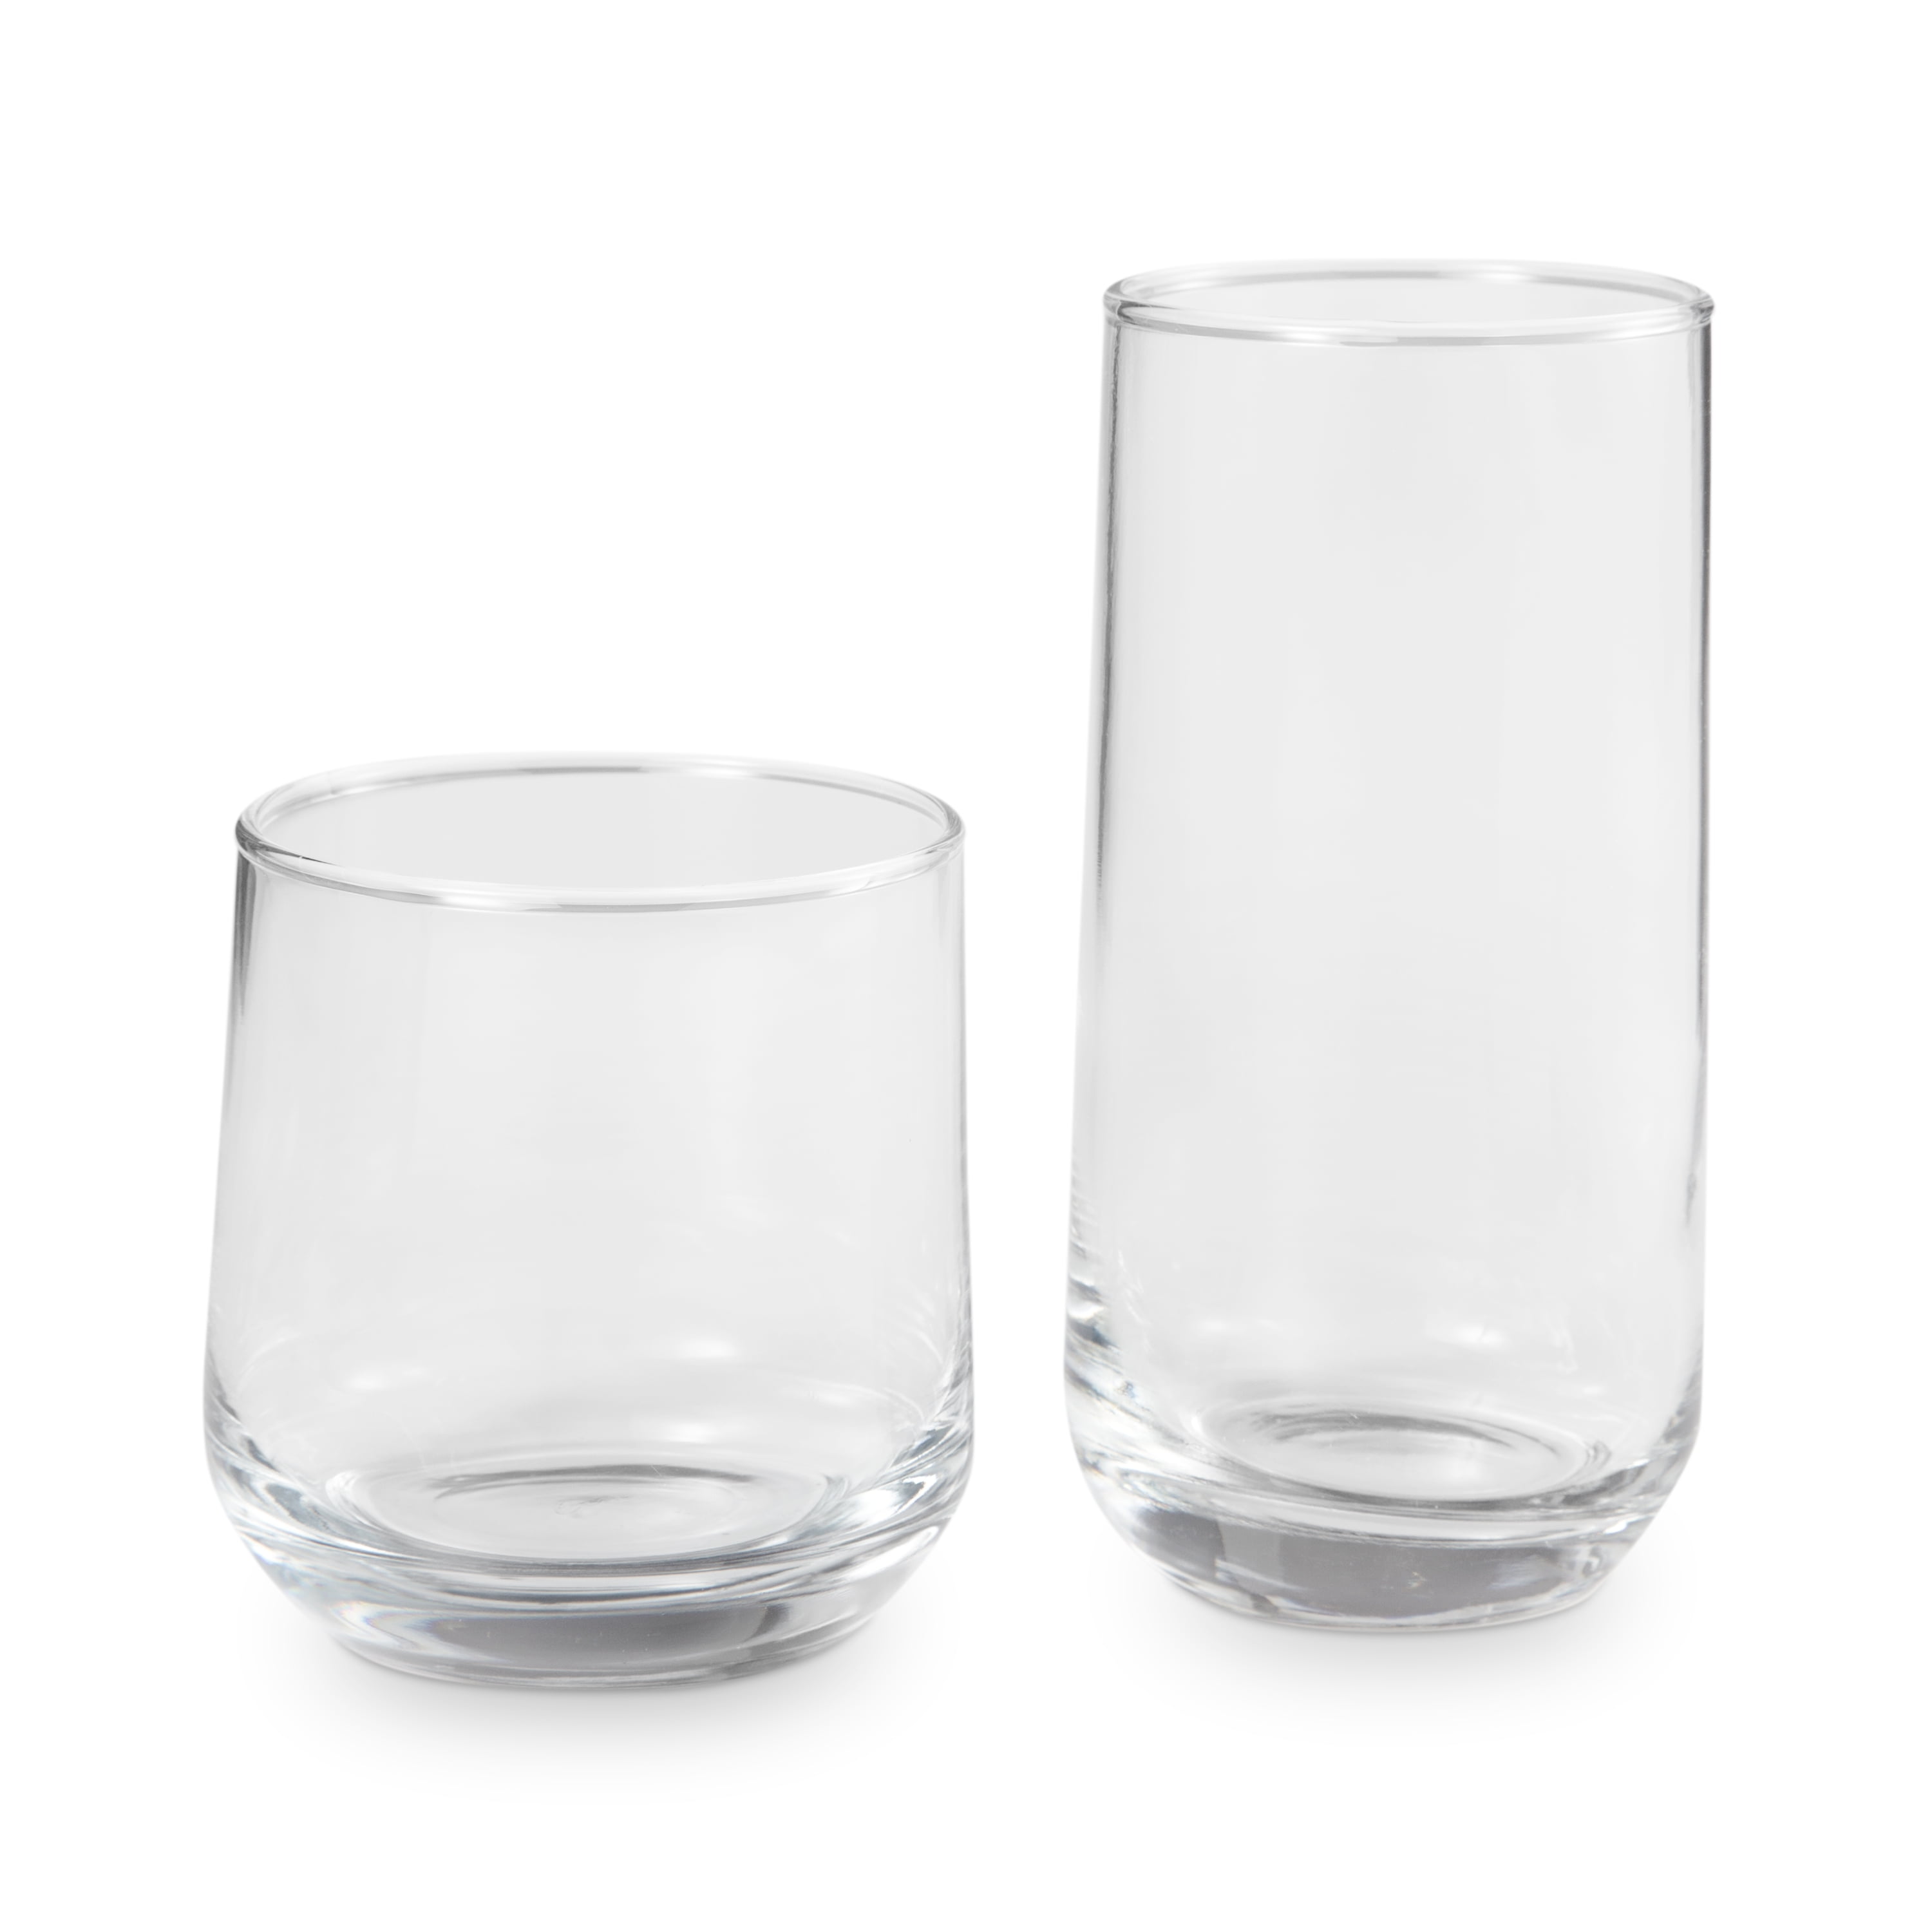 Stainless Steel Tableware Drinkware Tumbler Drinking Glasses Set of 6 Pcs 